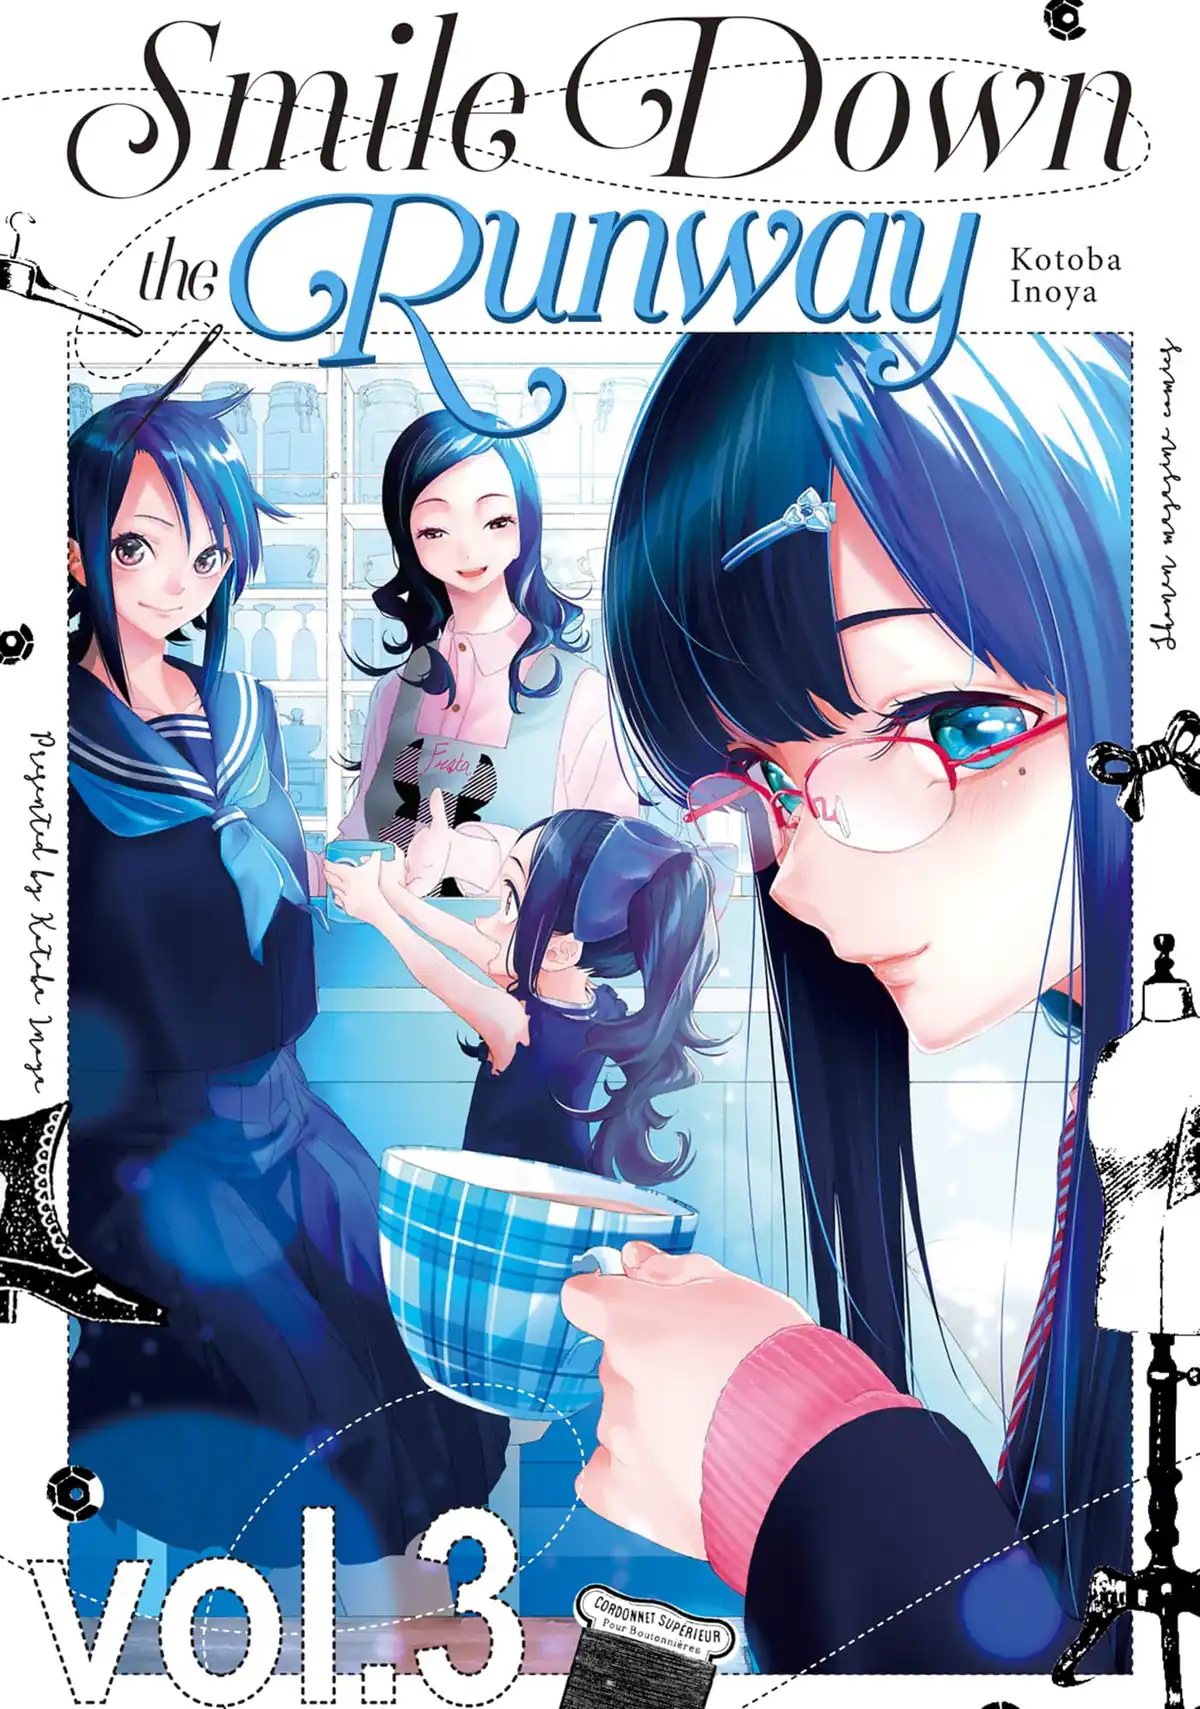 Runway de Waratte Manga - Chapter 33 - Manga Rock Team - Read